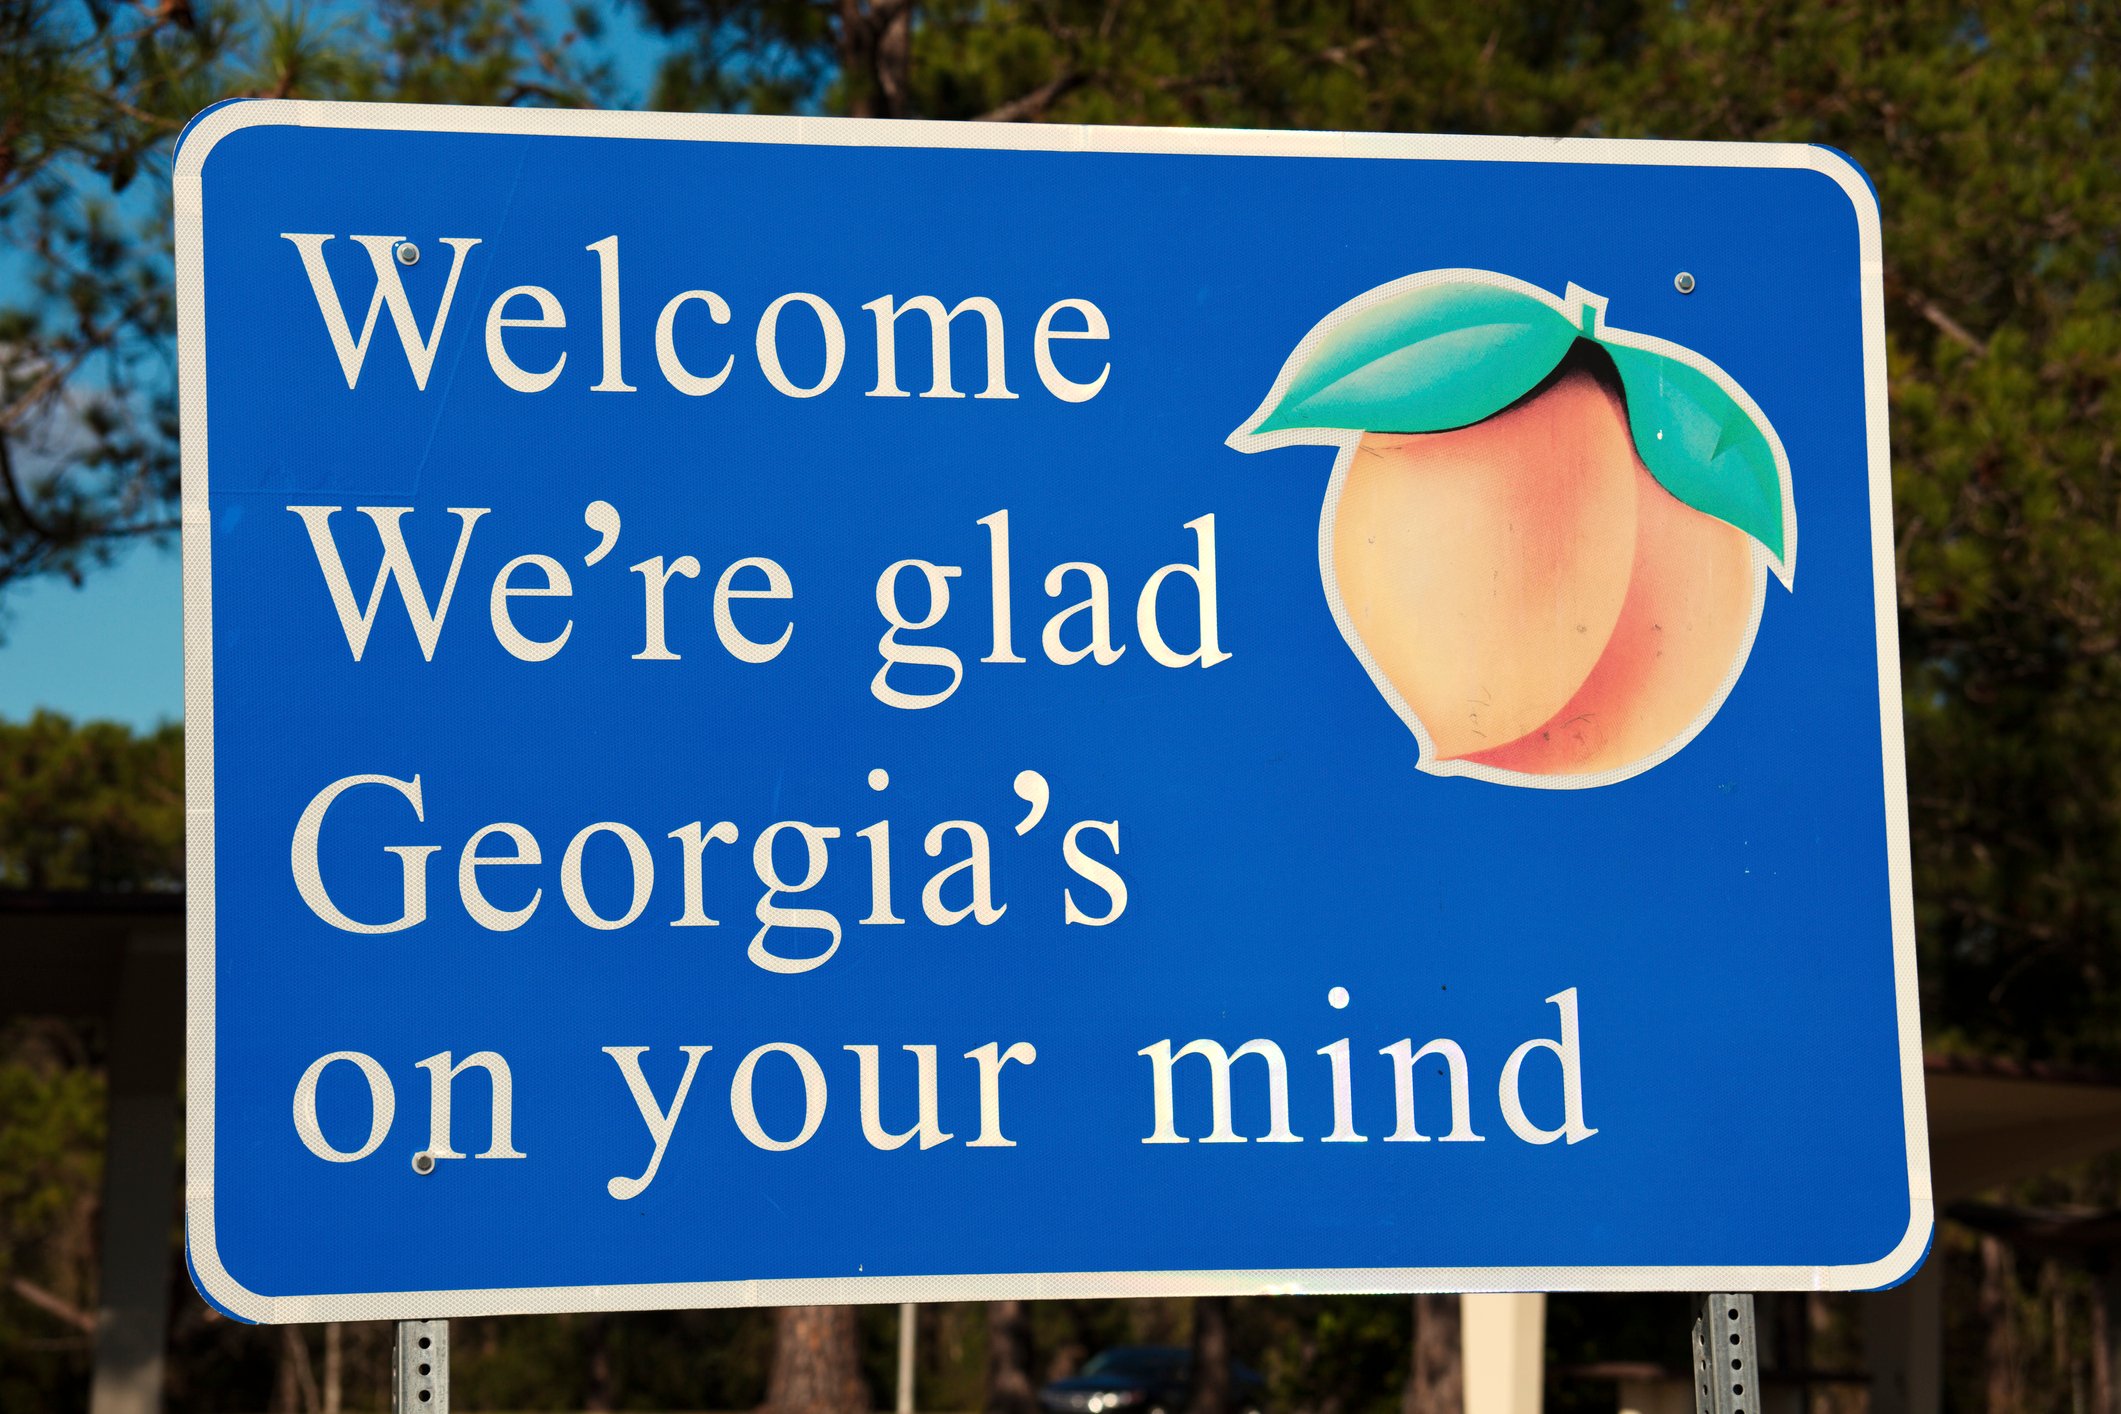 Georgia peaches